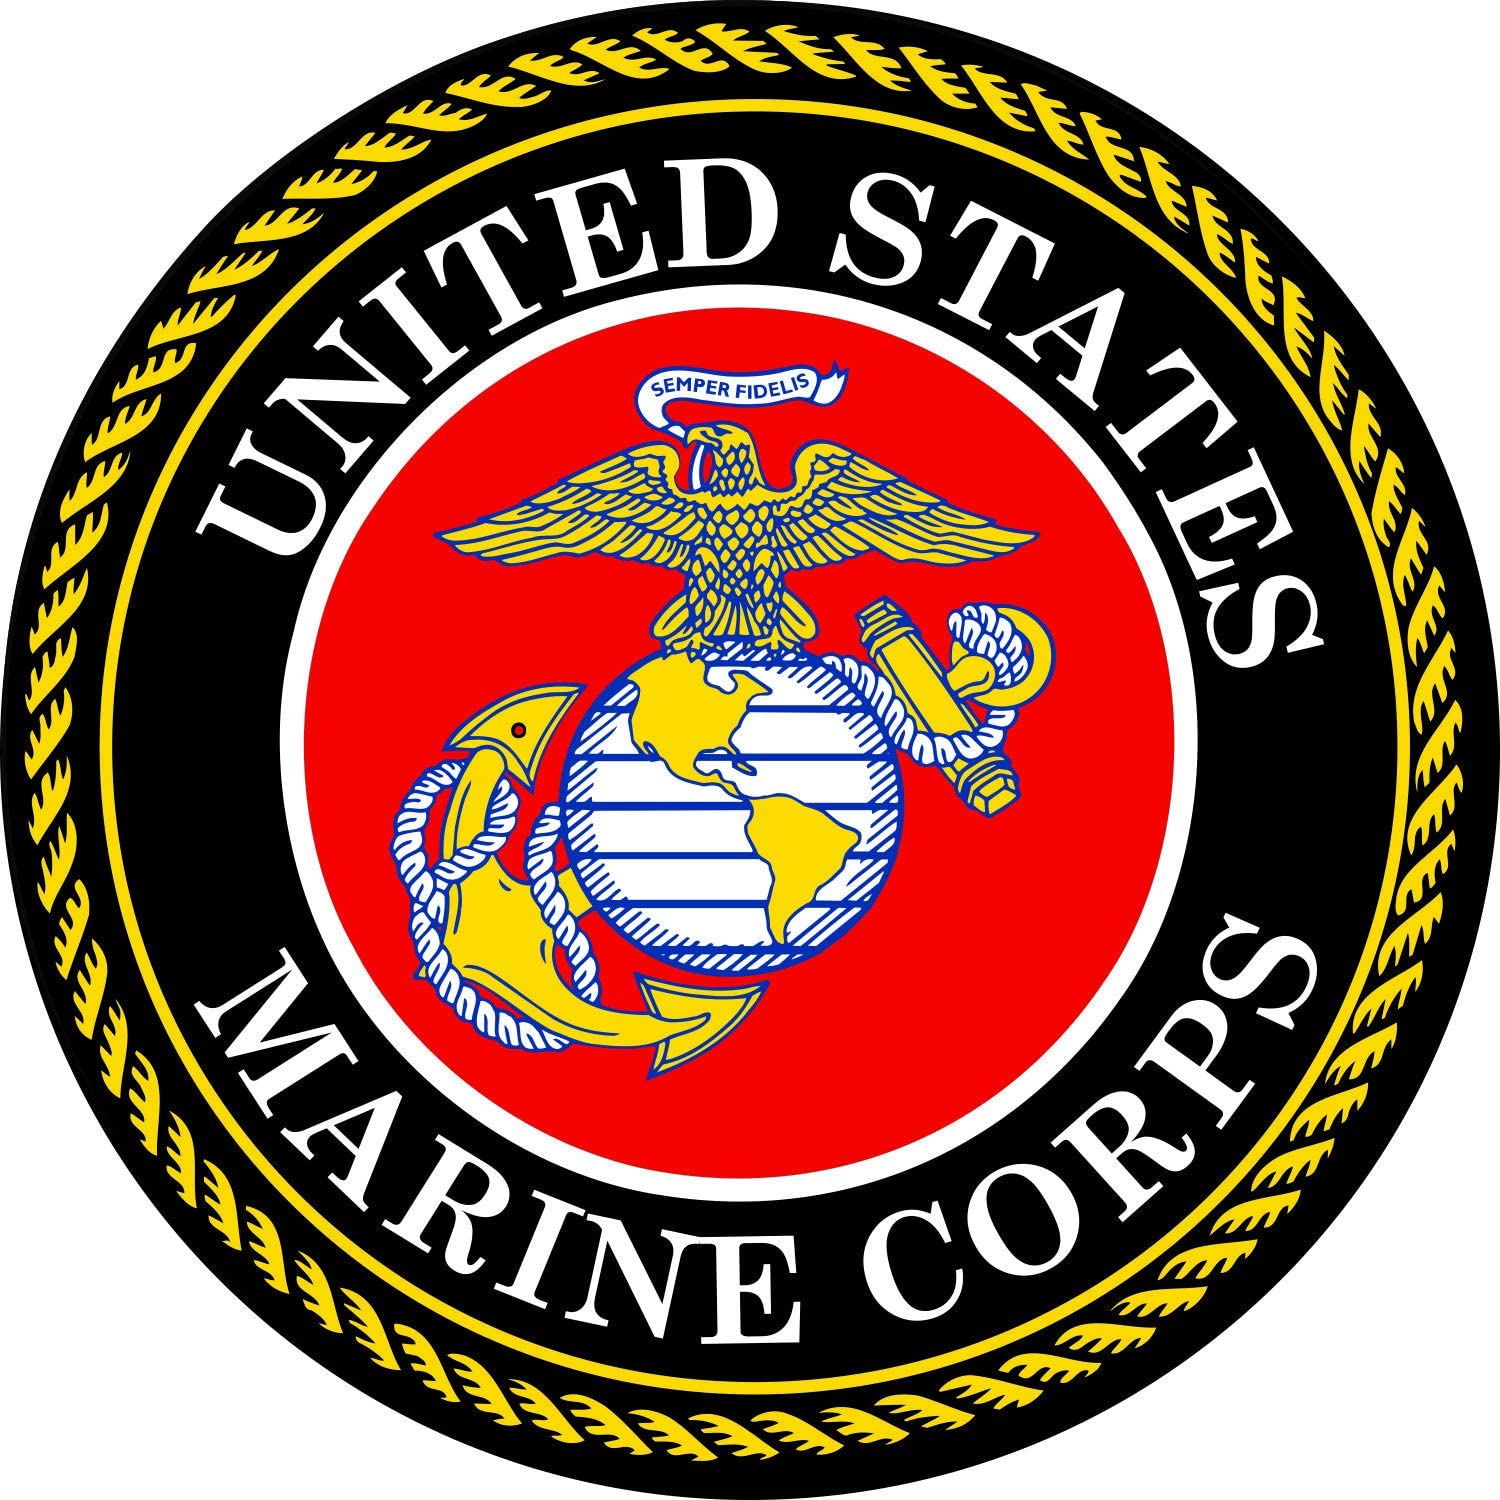 U.S. Marine Corps emblem